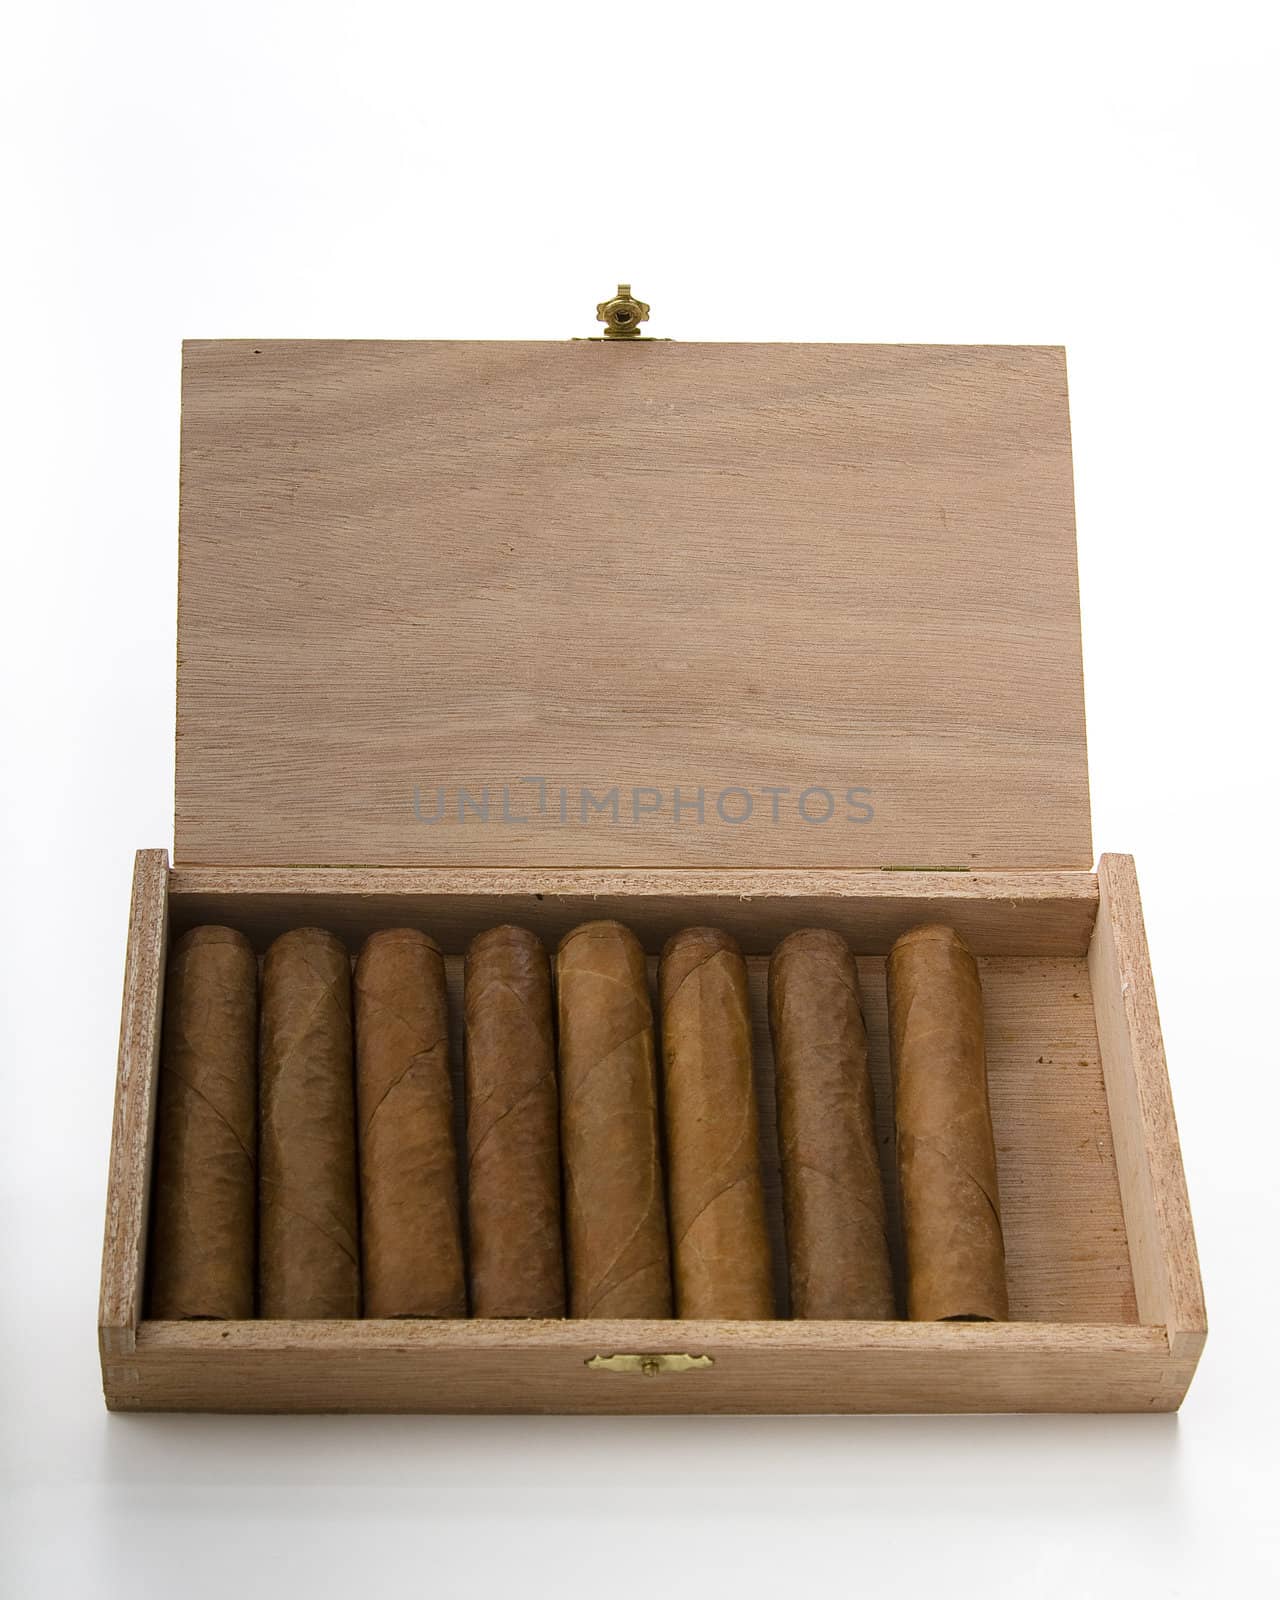 Cuban cigar in a small wood box